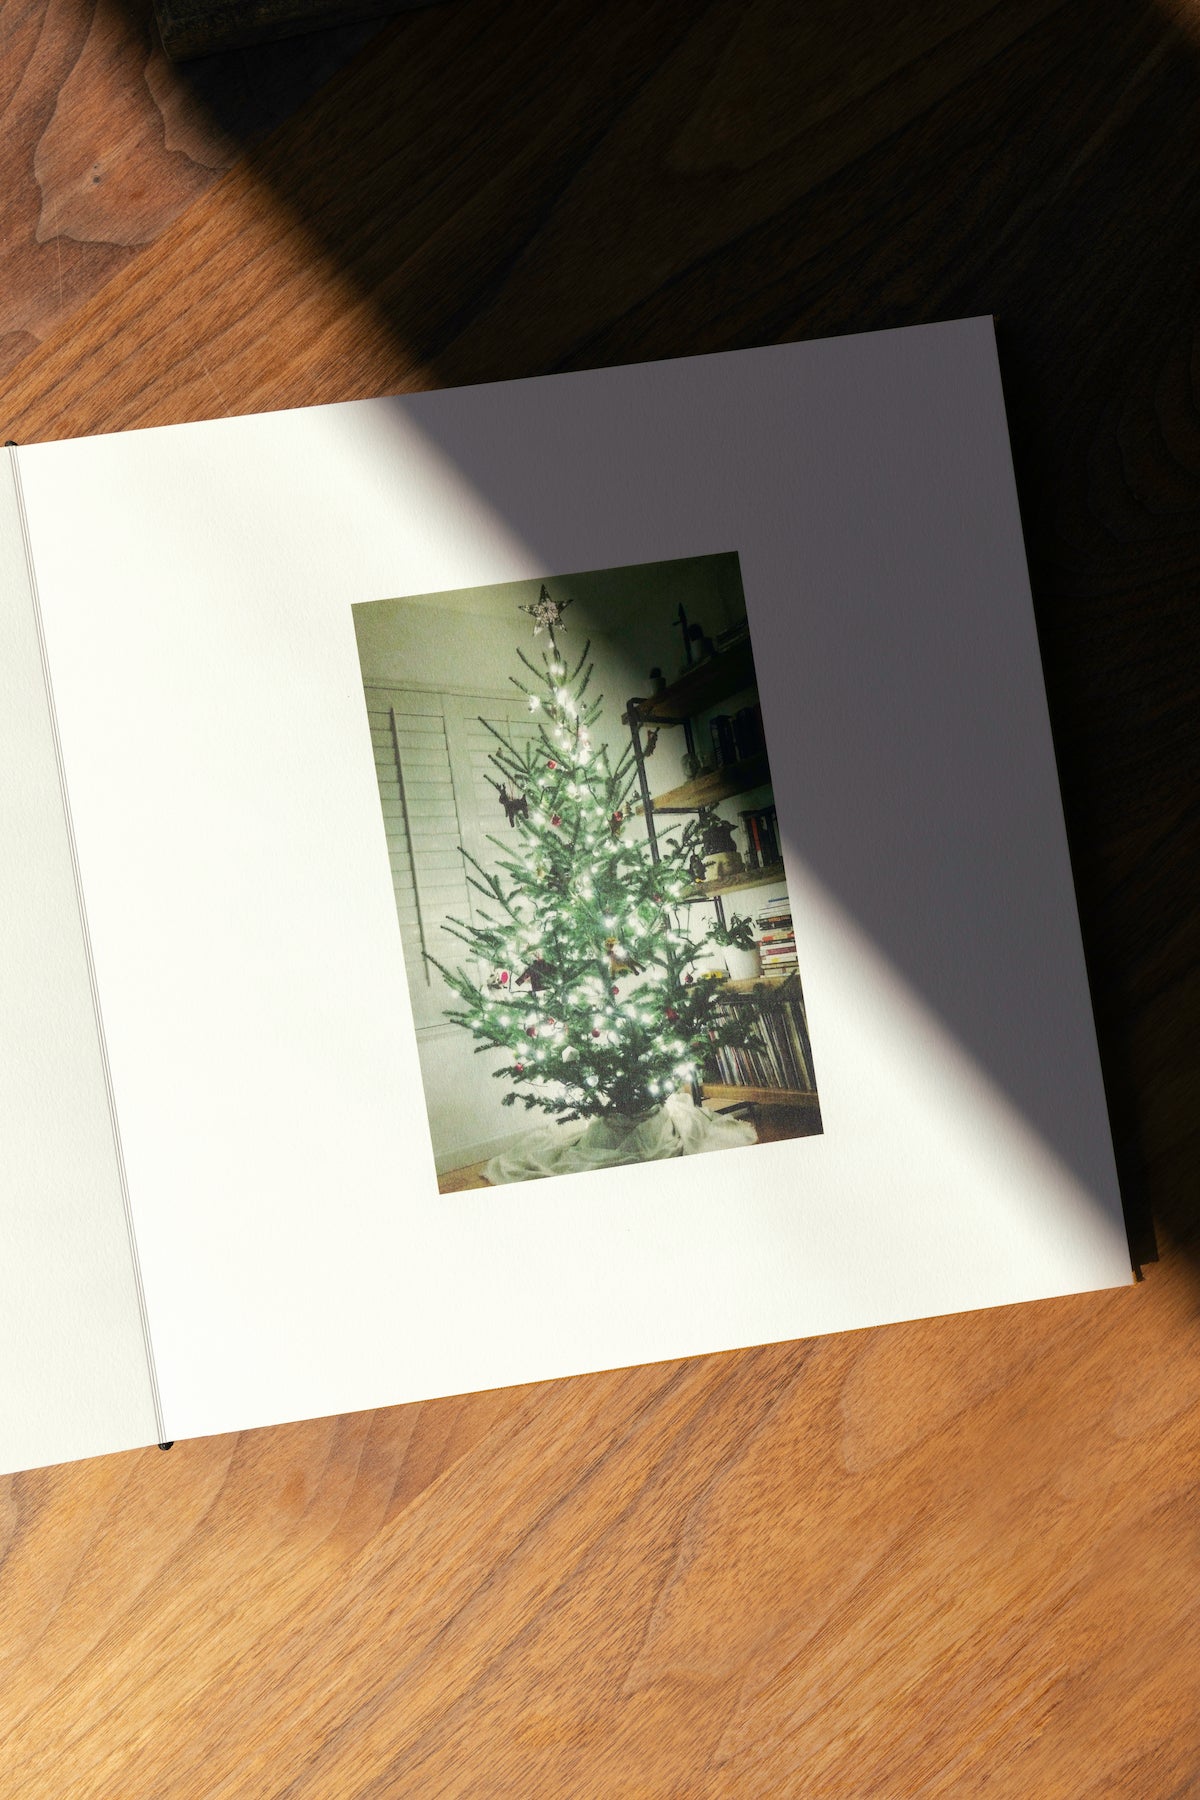 Artifact Uprising Layflat Photo Album opened to photo of brightly lit Christmas tree